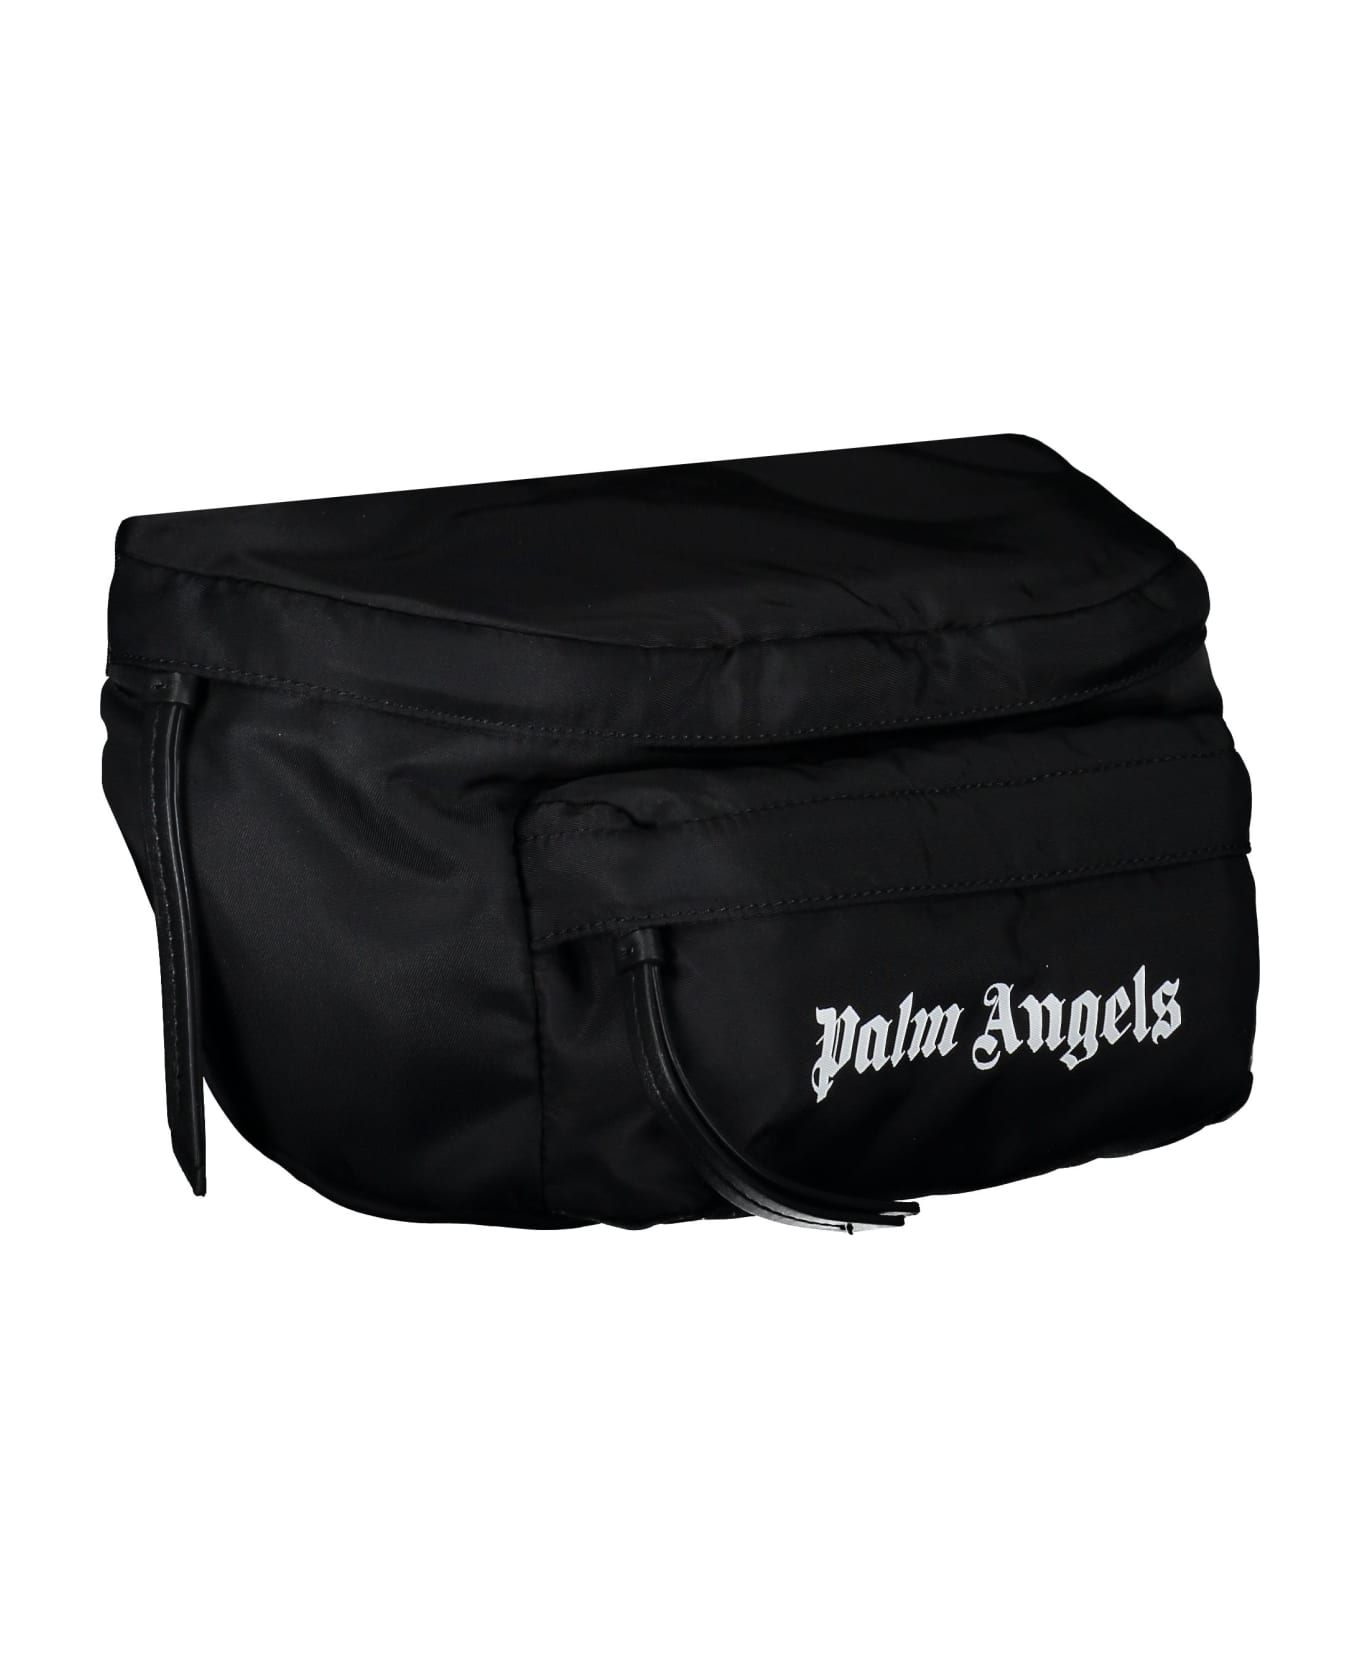 Palm Angels Nylon Belt Bag - black